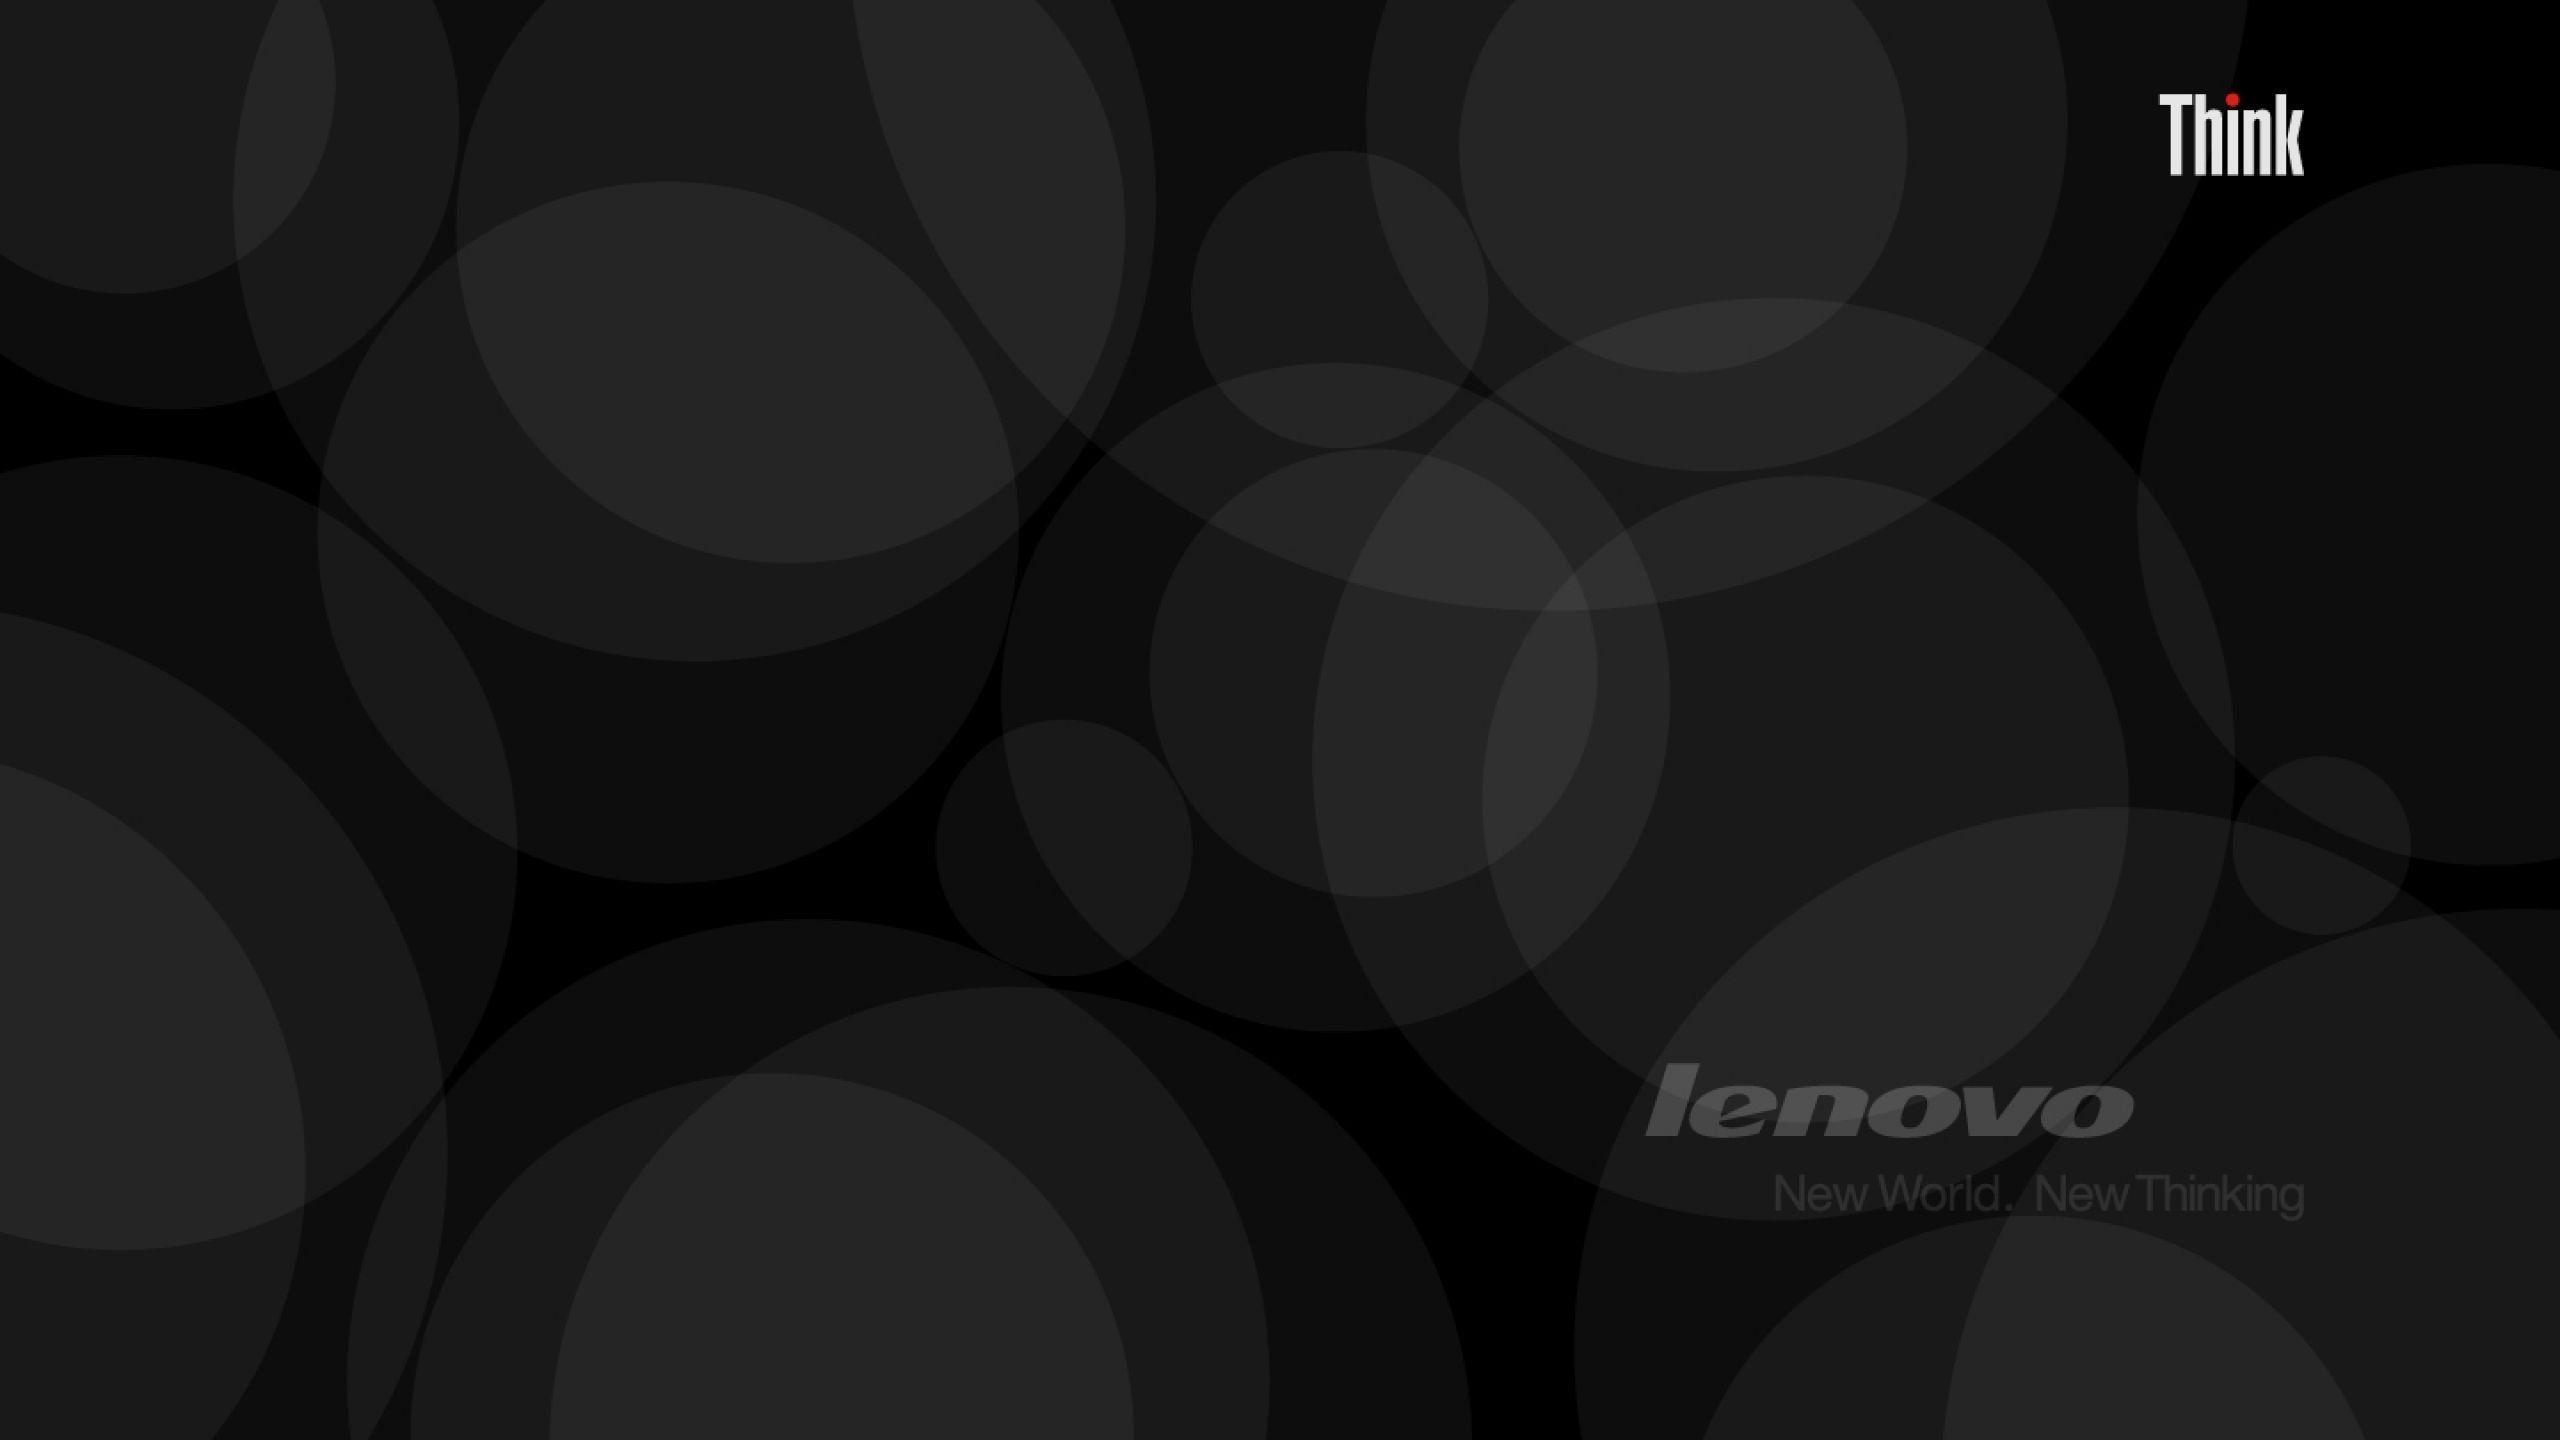 Lenovo Dark Wallpapers Top Free Lenovo Dark Backgrounds Wallpaperaccess